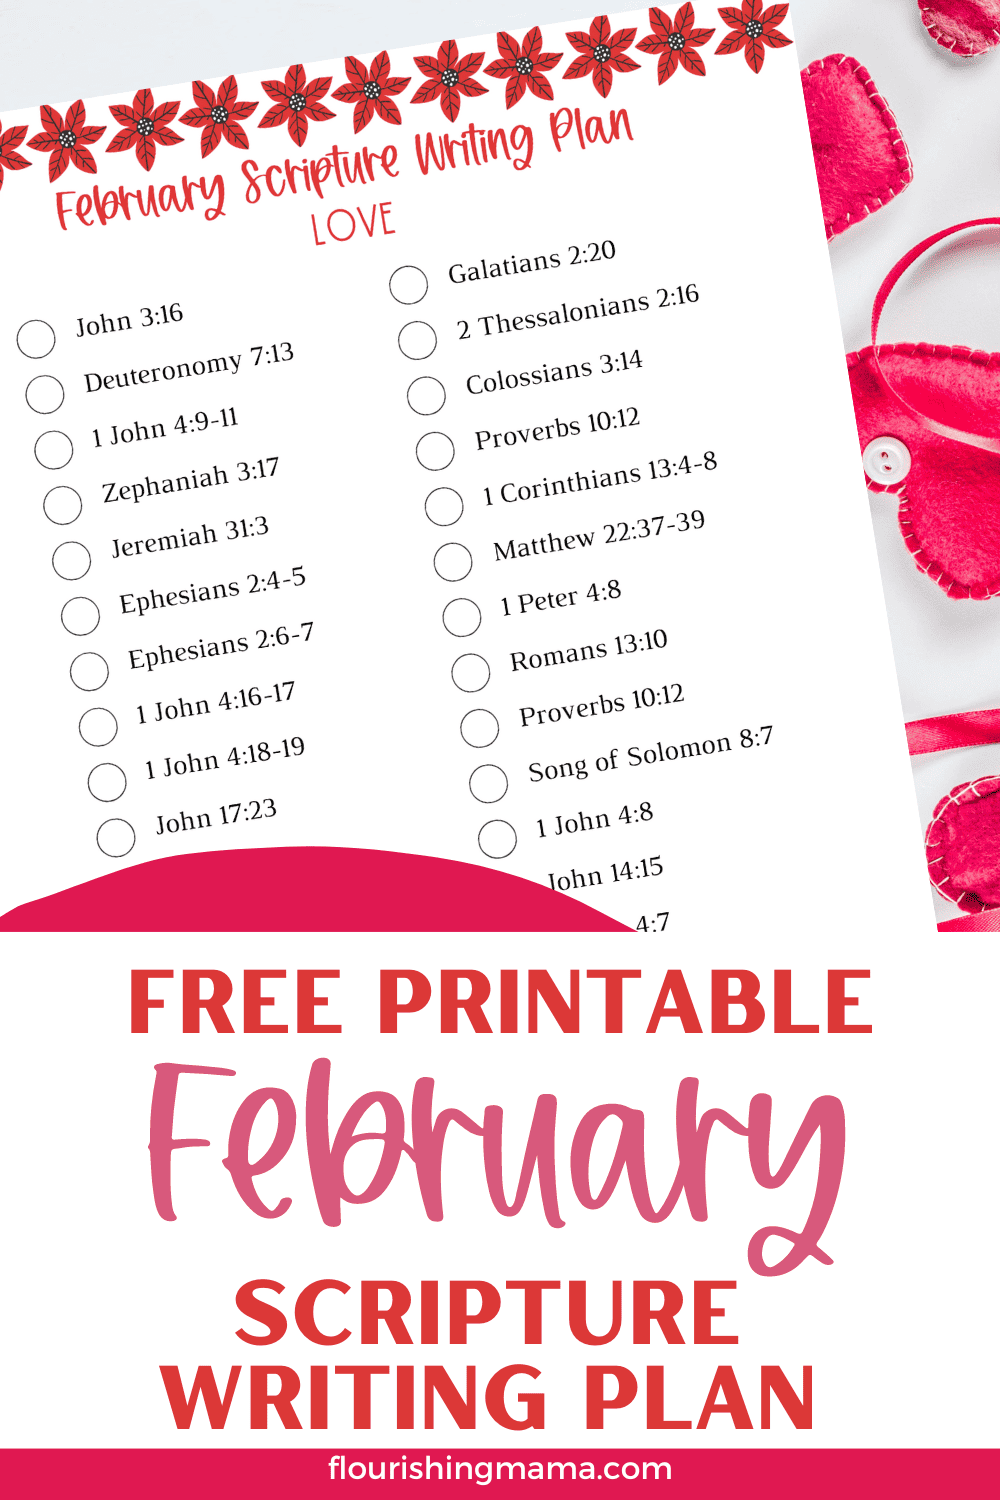 Free Printable February Scripture Writing Plan